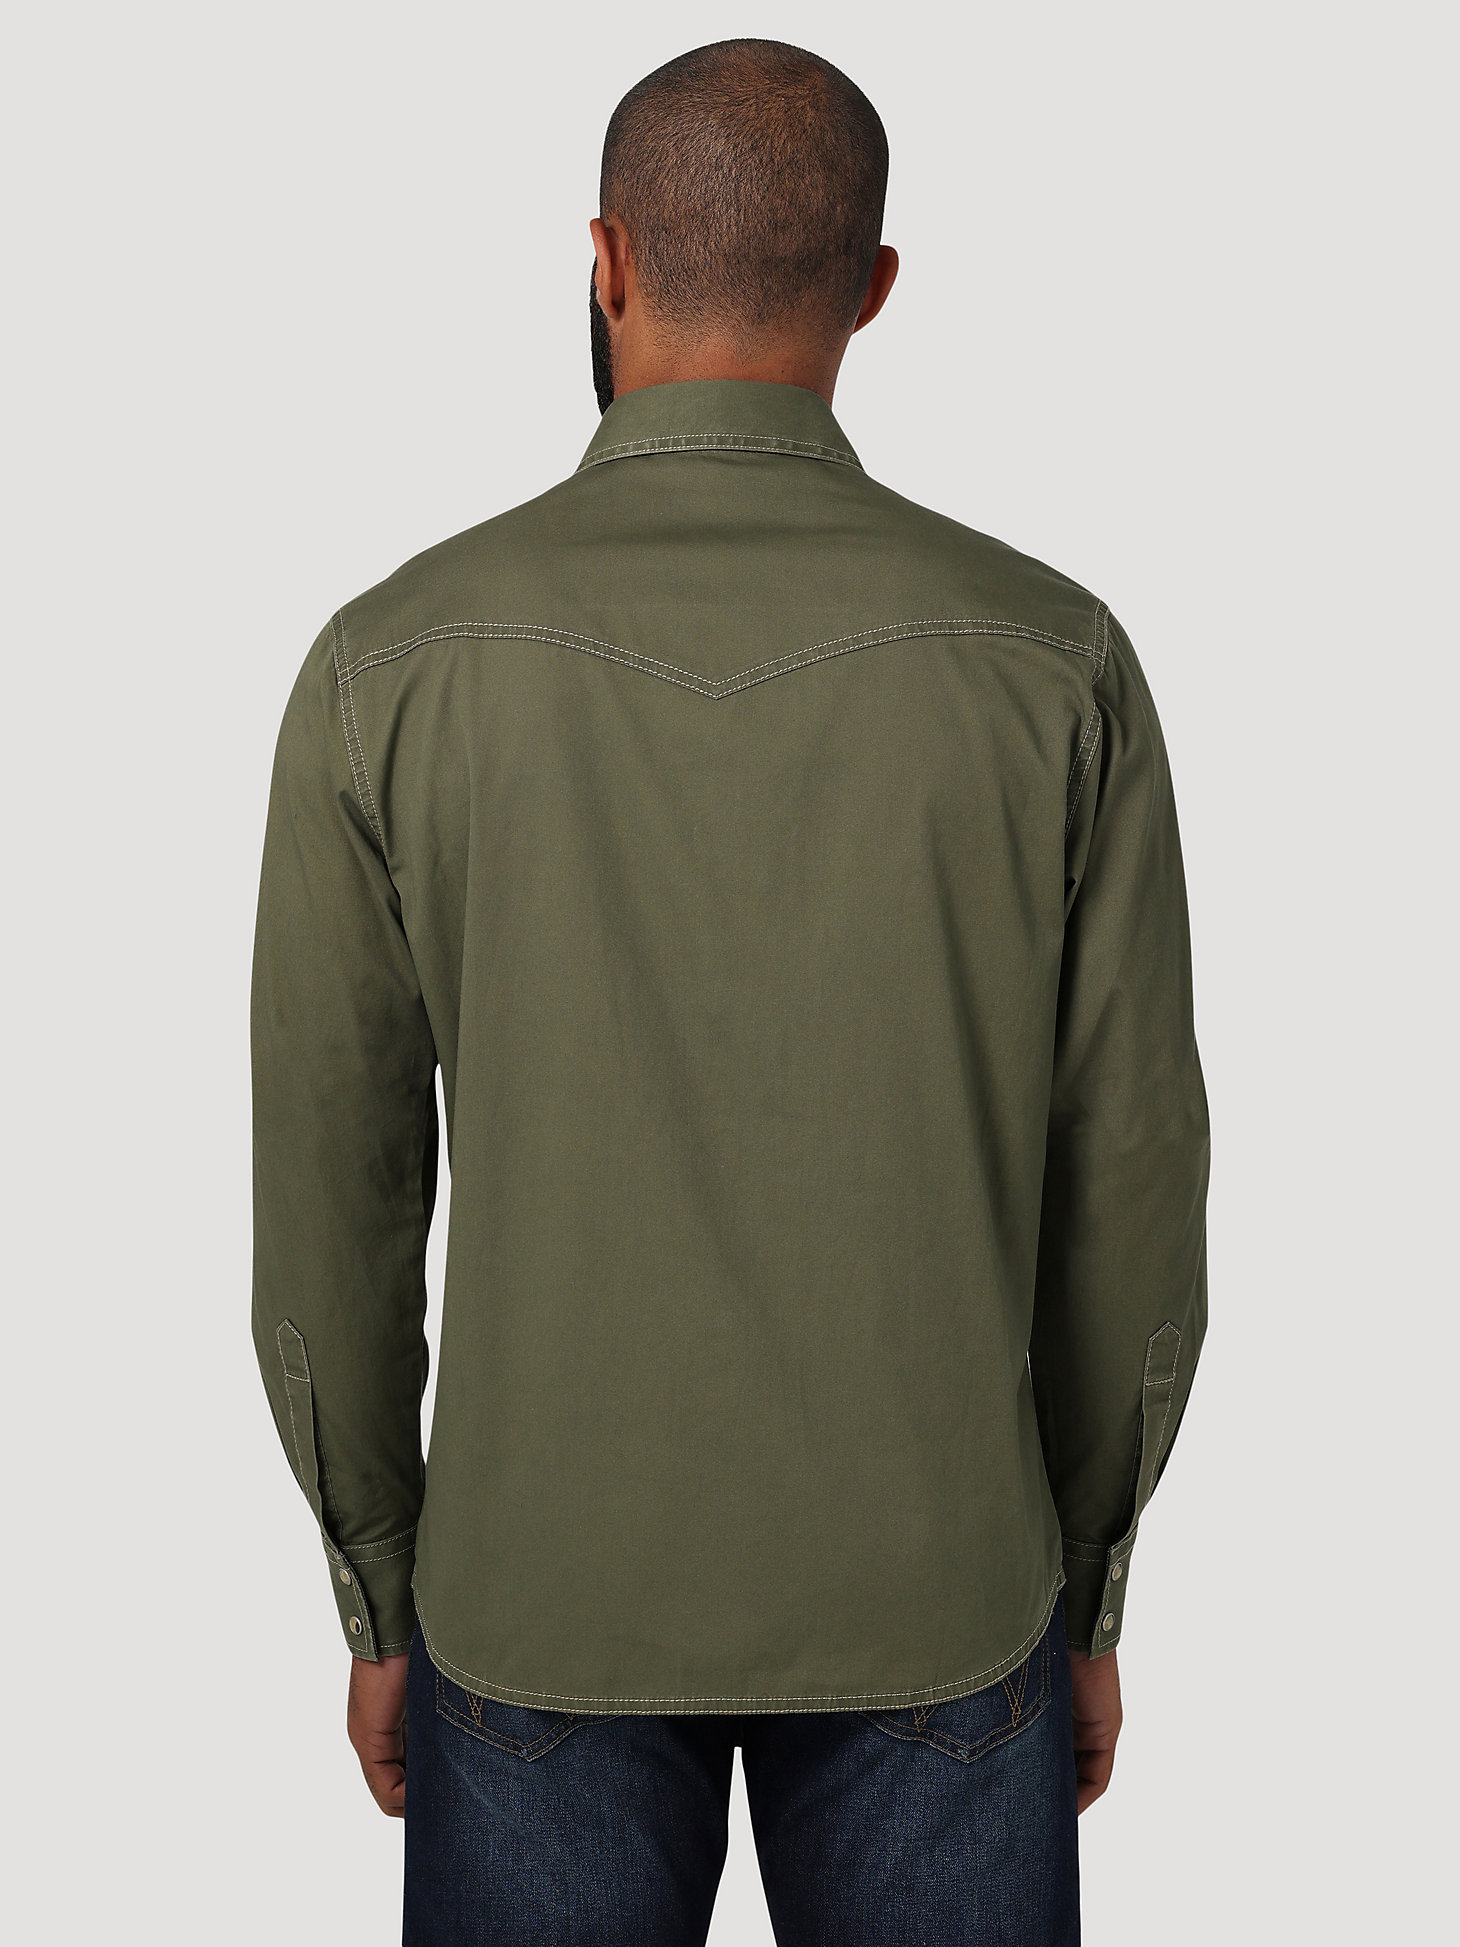 Men's Wrangler Retro Premium Western Snap Solid Shirt in Grape Leaf alternative view 1